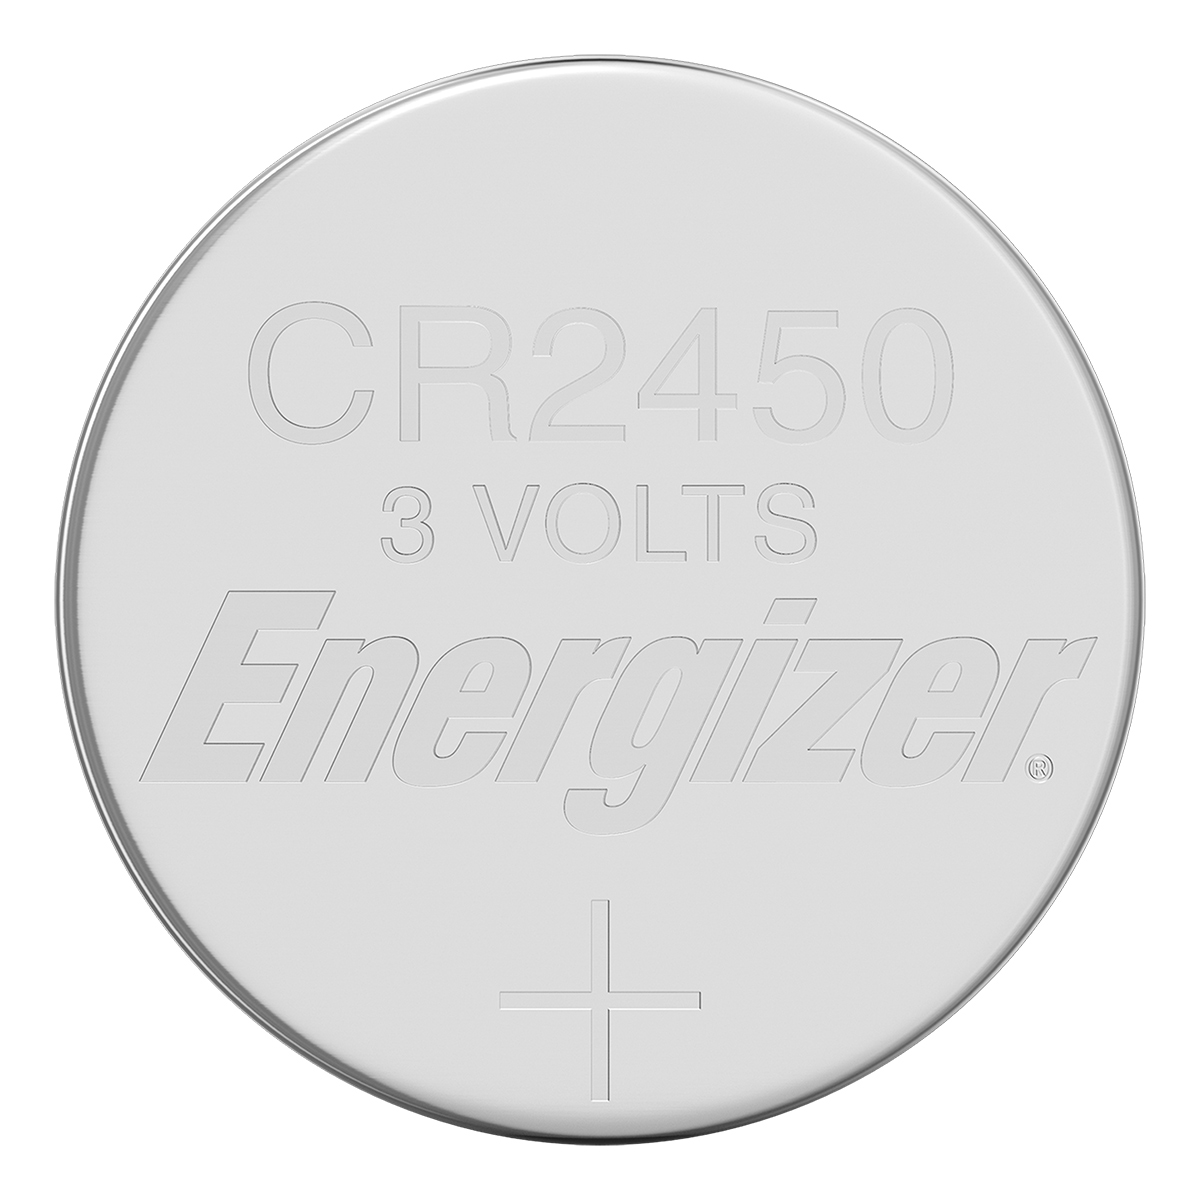 Energizer Lithiumbatterien CR2450